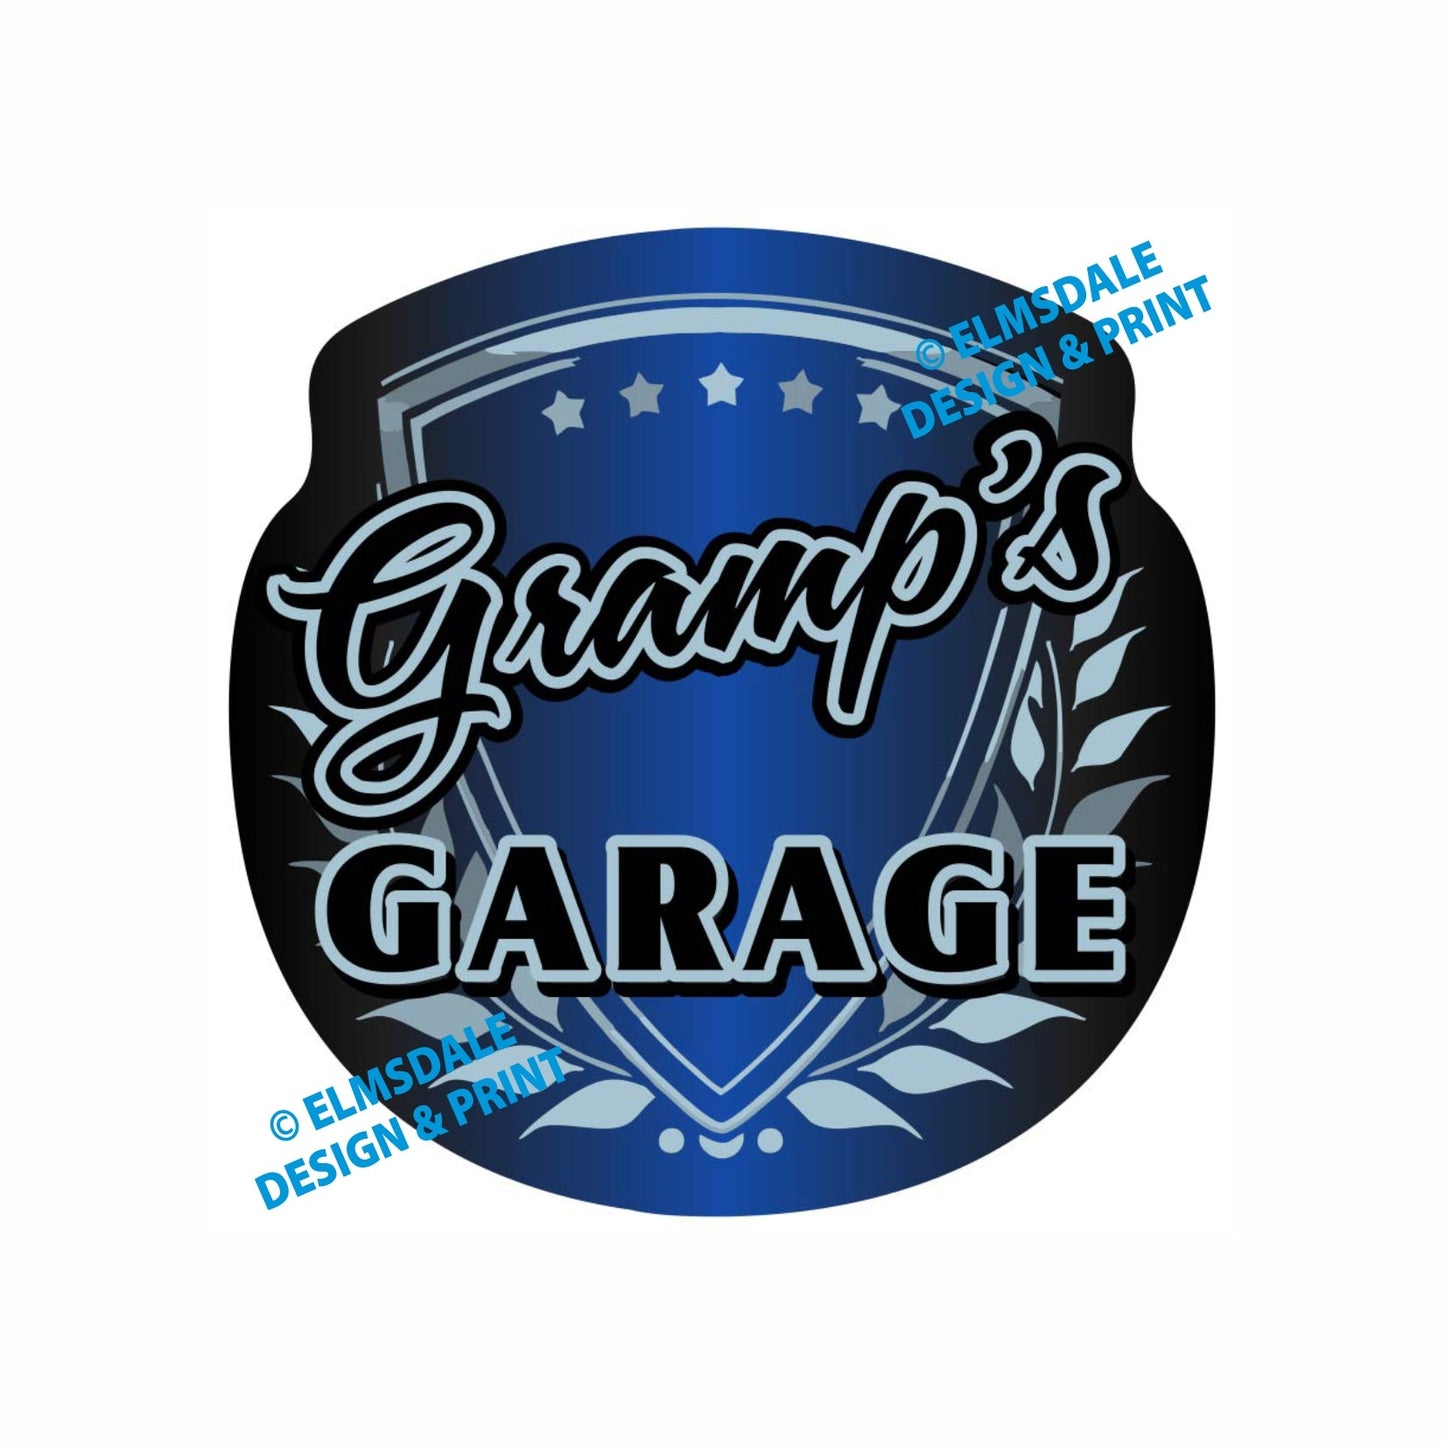 Gramps Garage - Decal / 9.25’ x 9.25’ / Silver & Blue